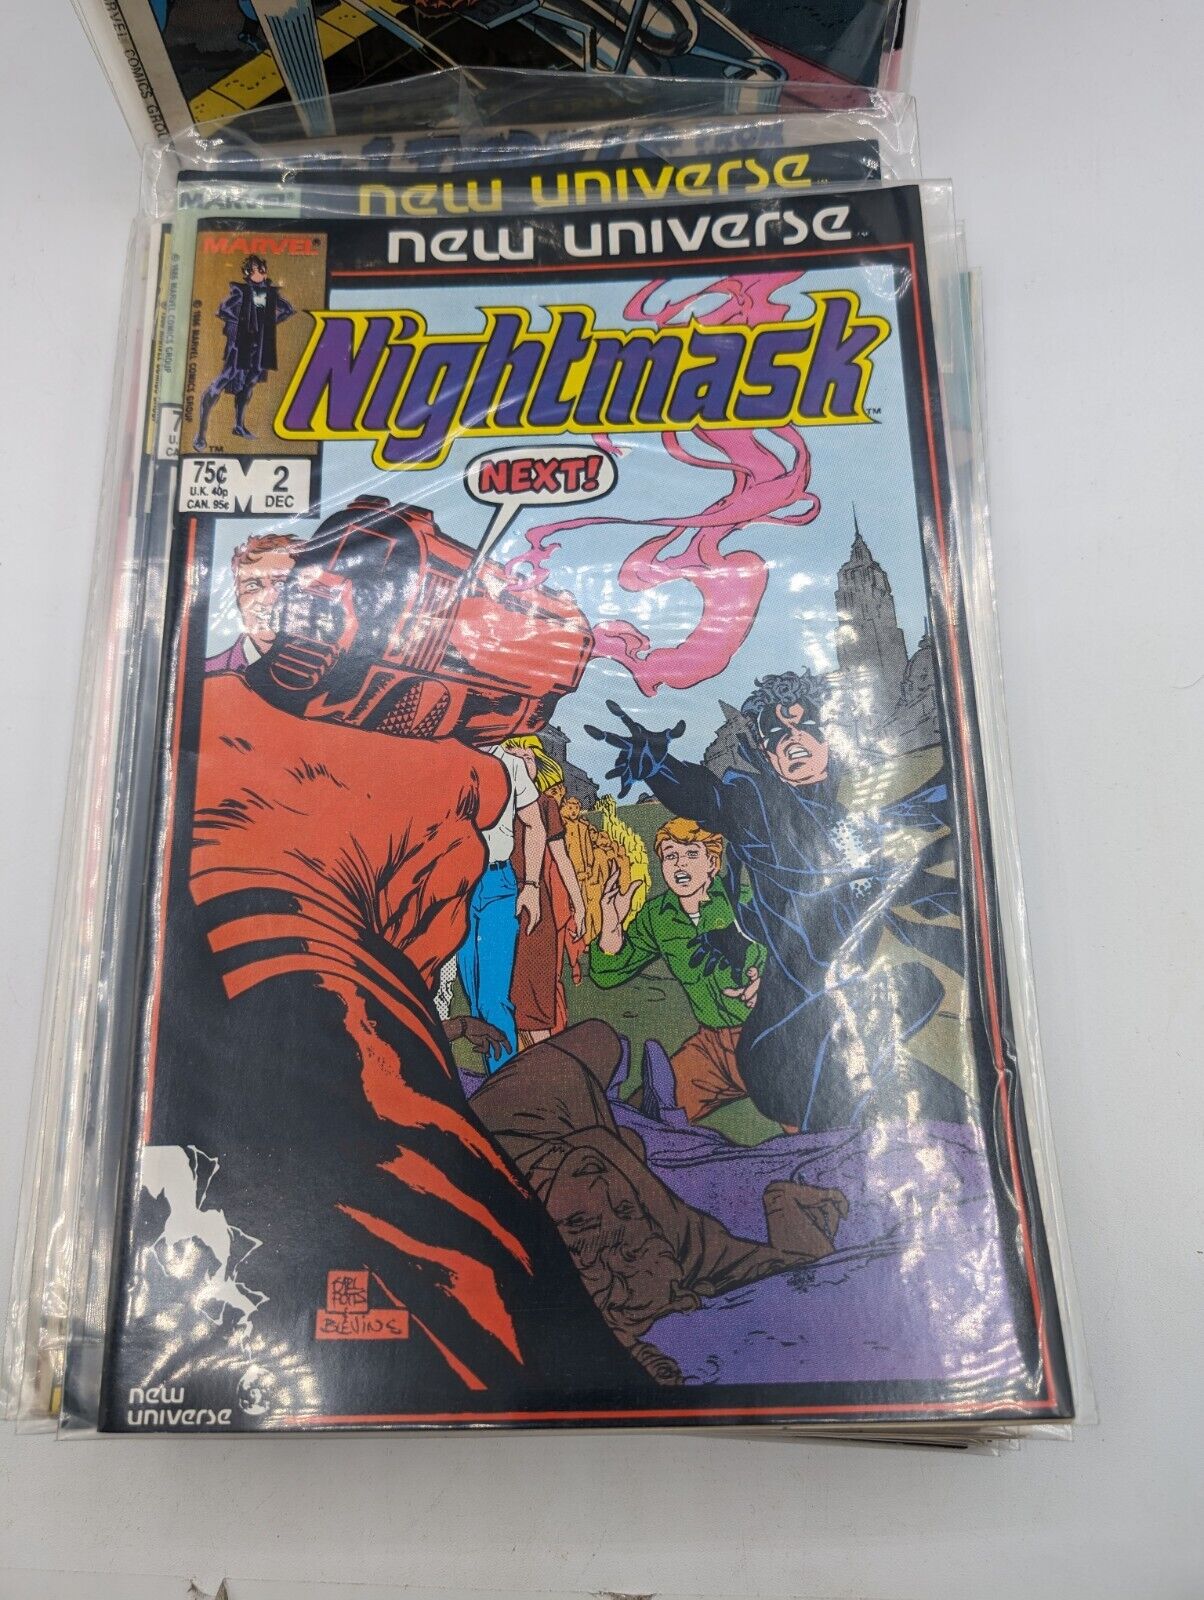 NIGHTMASK #2 NEW UNIVERSE 1986 MARVEL COMICS